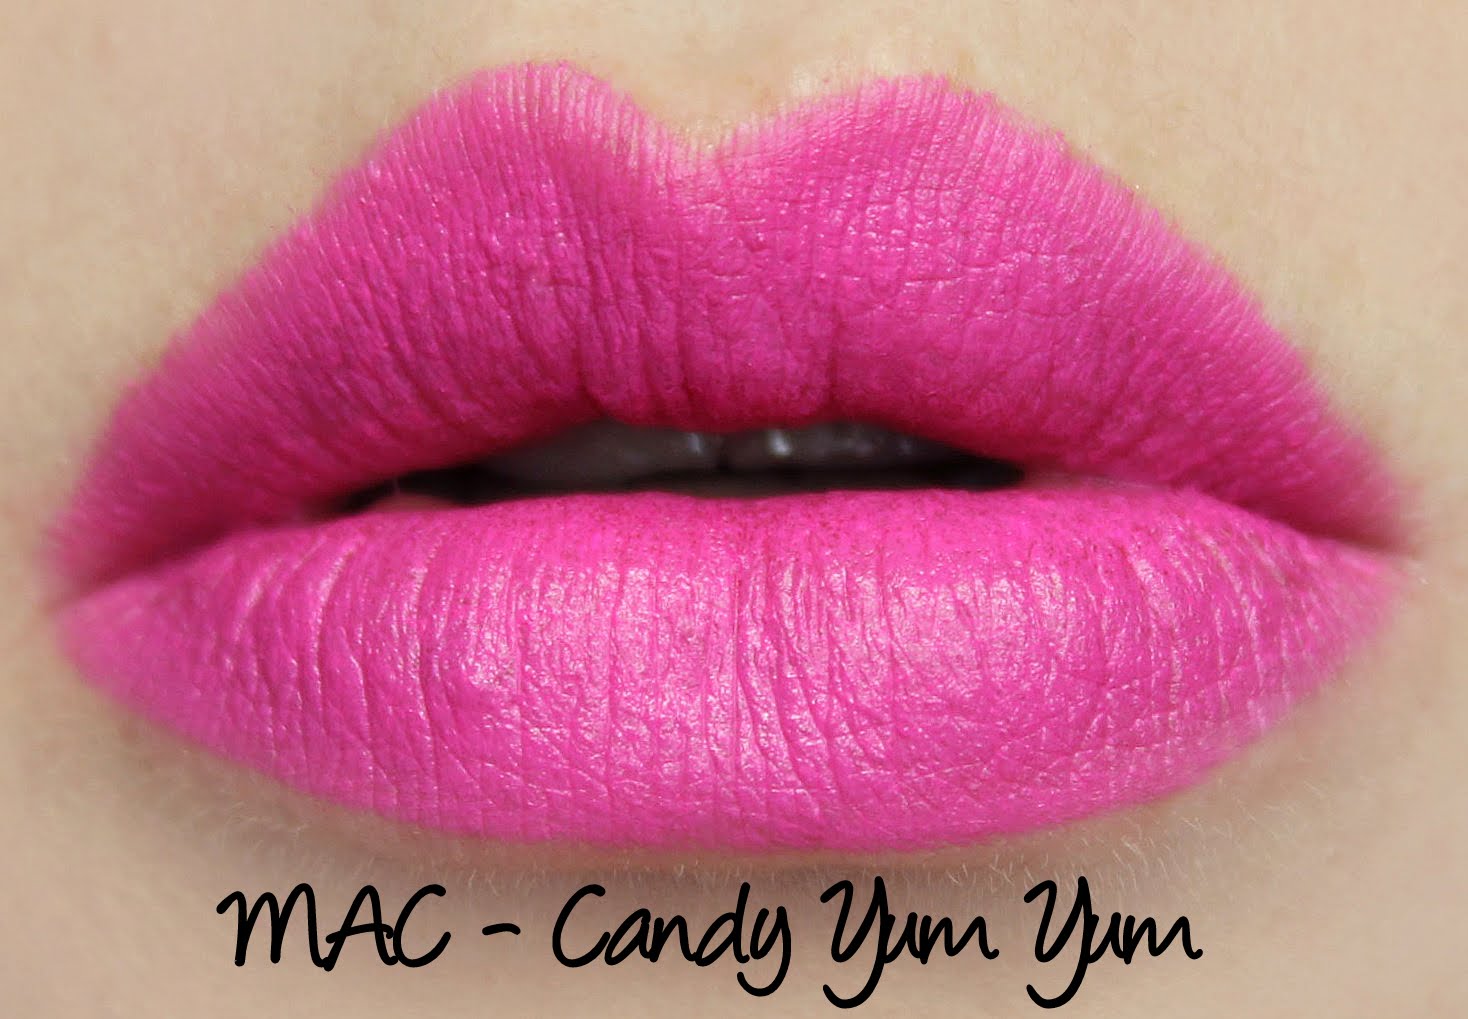 MAC Candy Yum Yum lipstick swatch